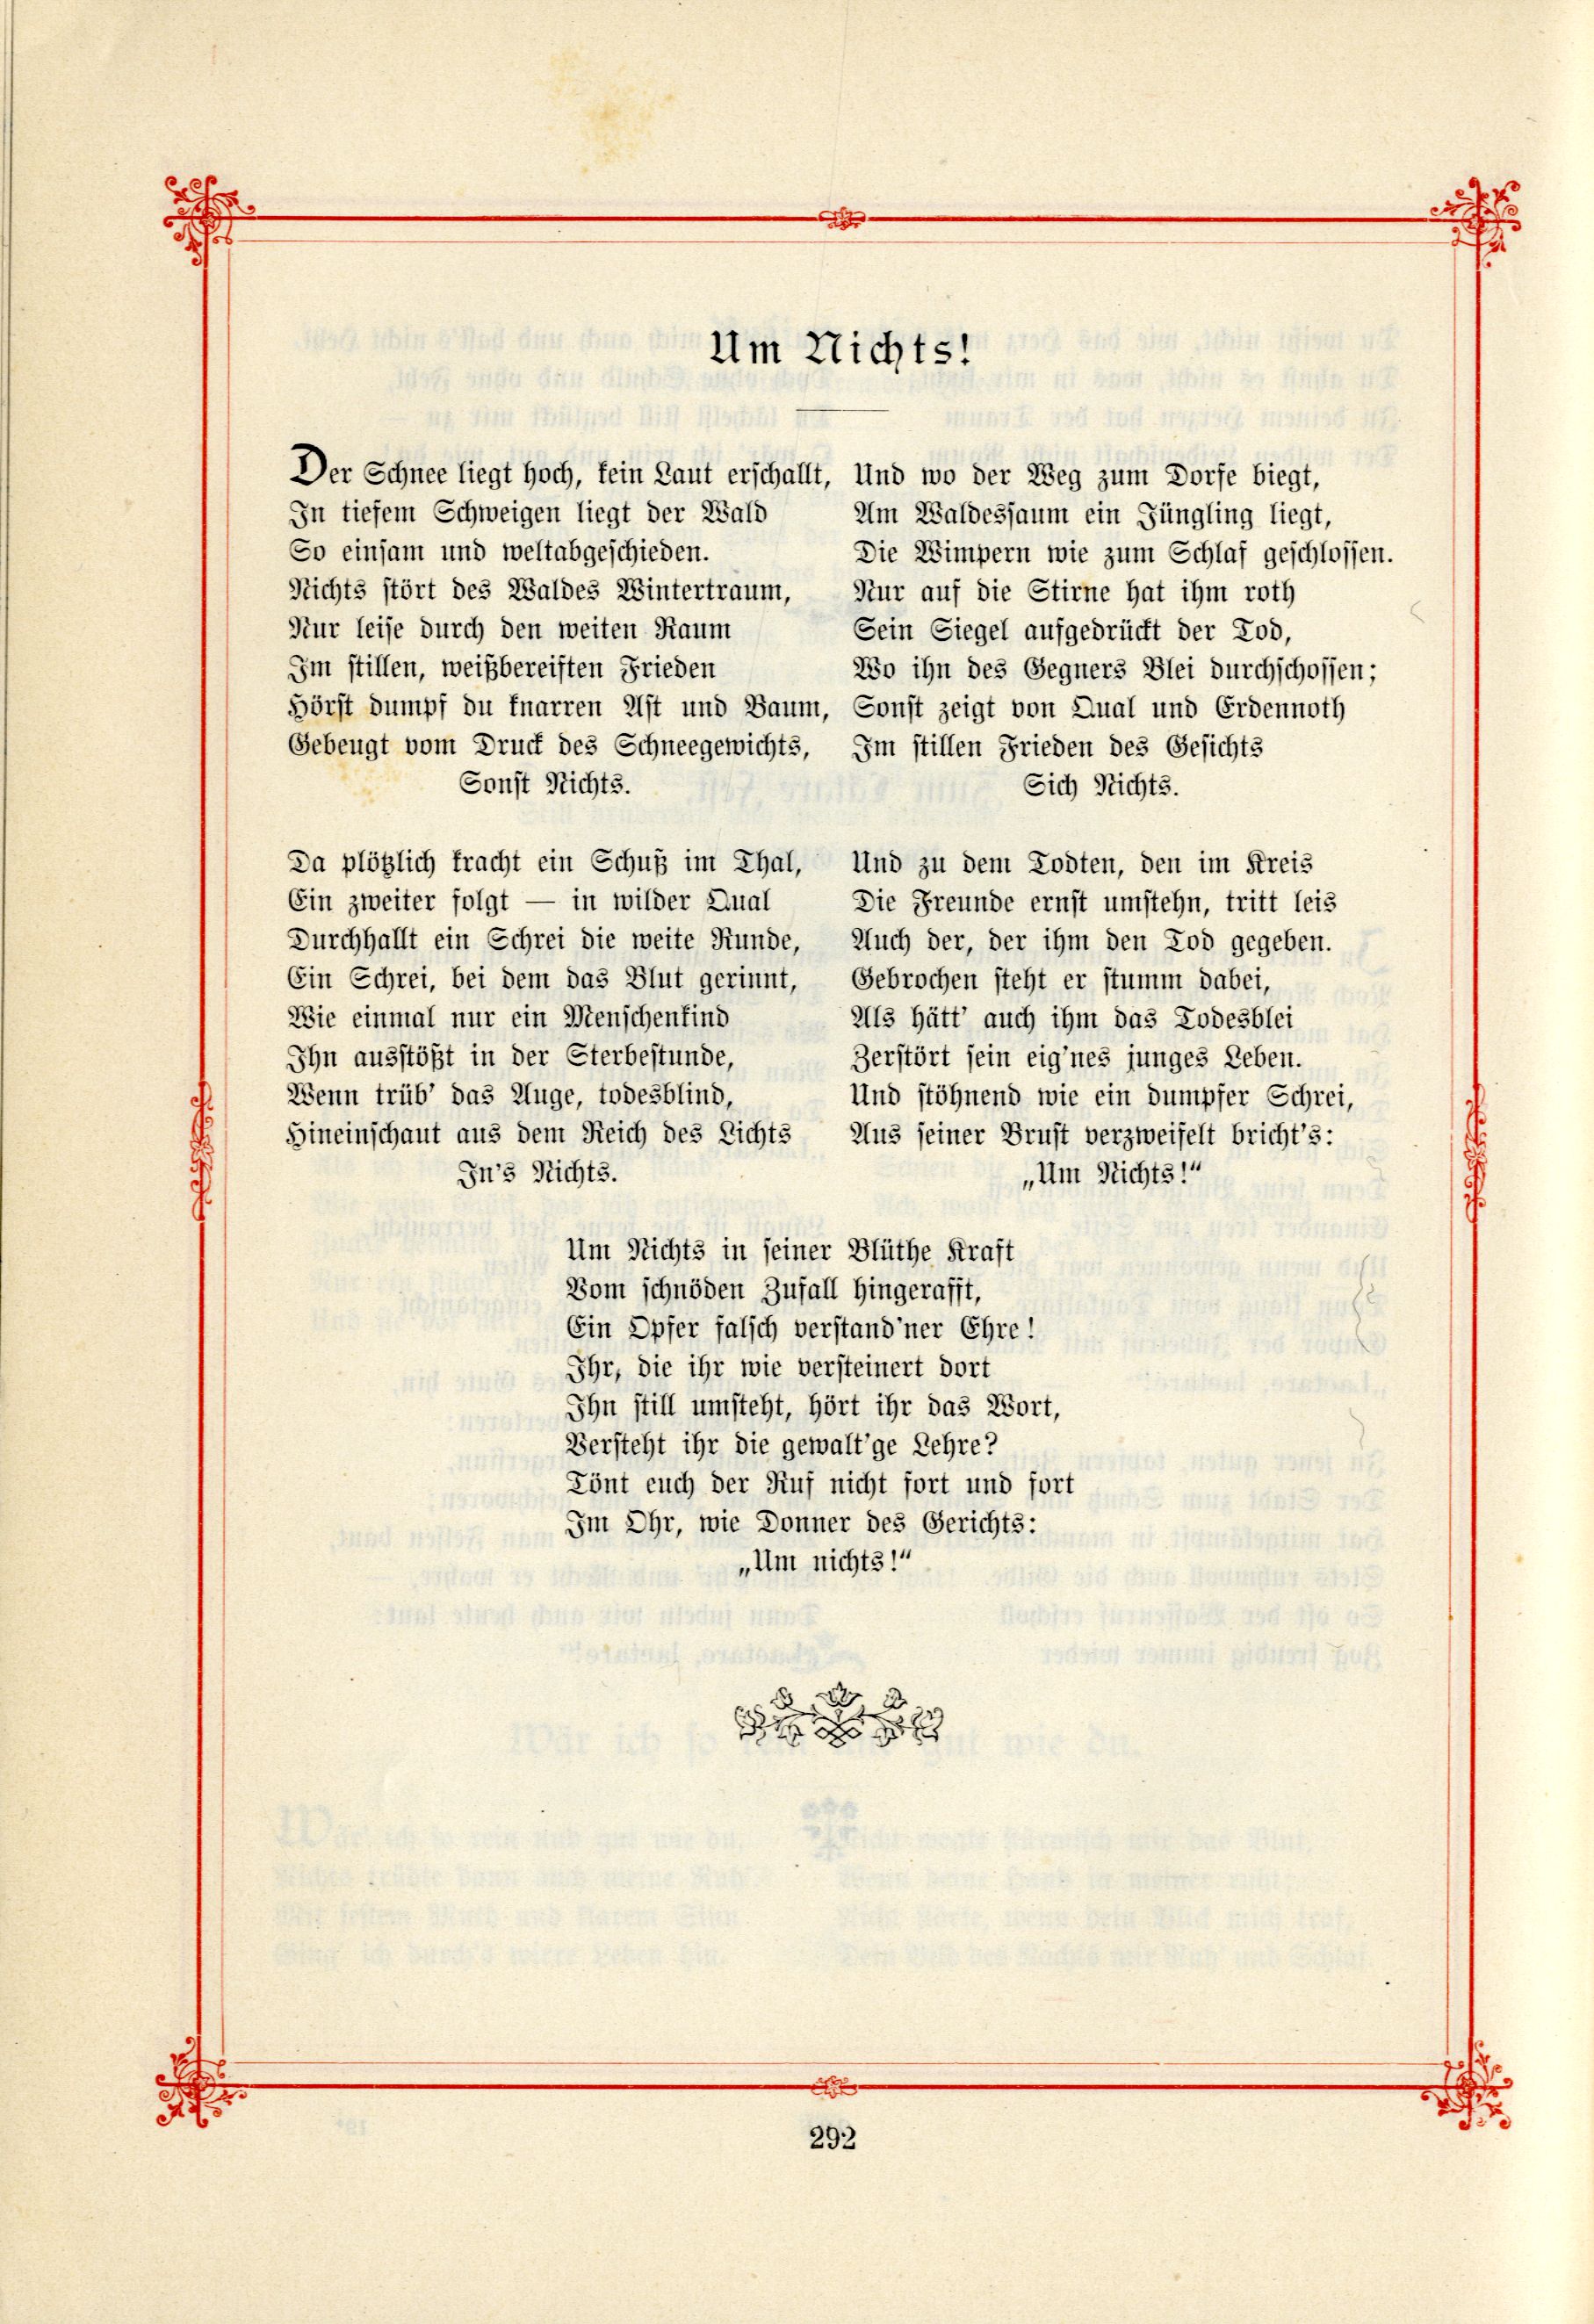 Um Nichts! (1895) | 1. (292) Main body of text